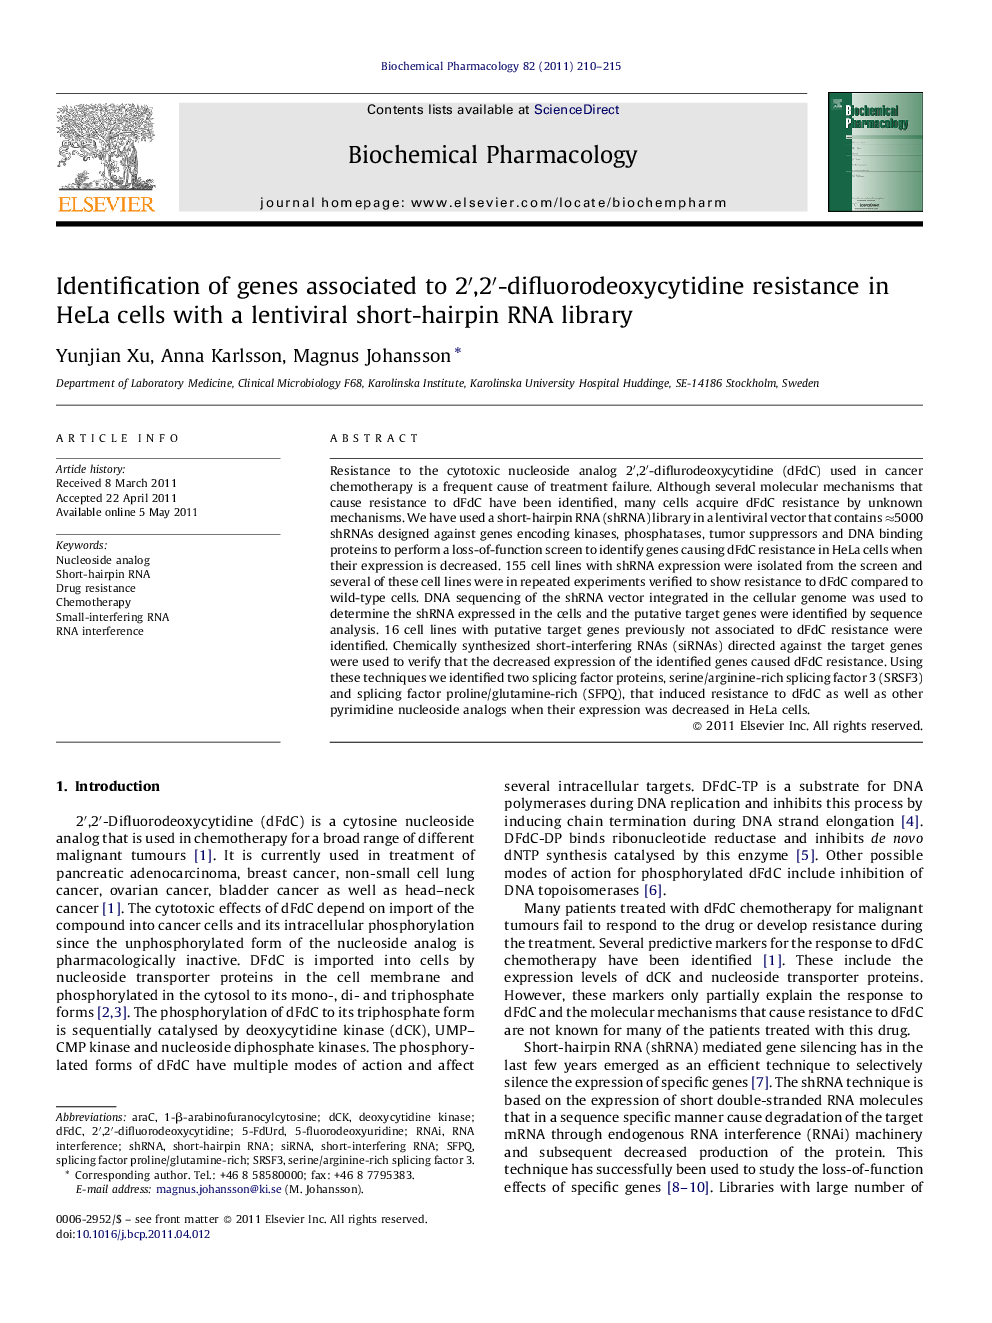 Identification of genes associated to 2â²,2â²-difluorodeoxycytidine resistance in HeLa cells with a lentiviral short-hairpin RNA library